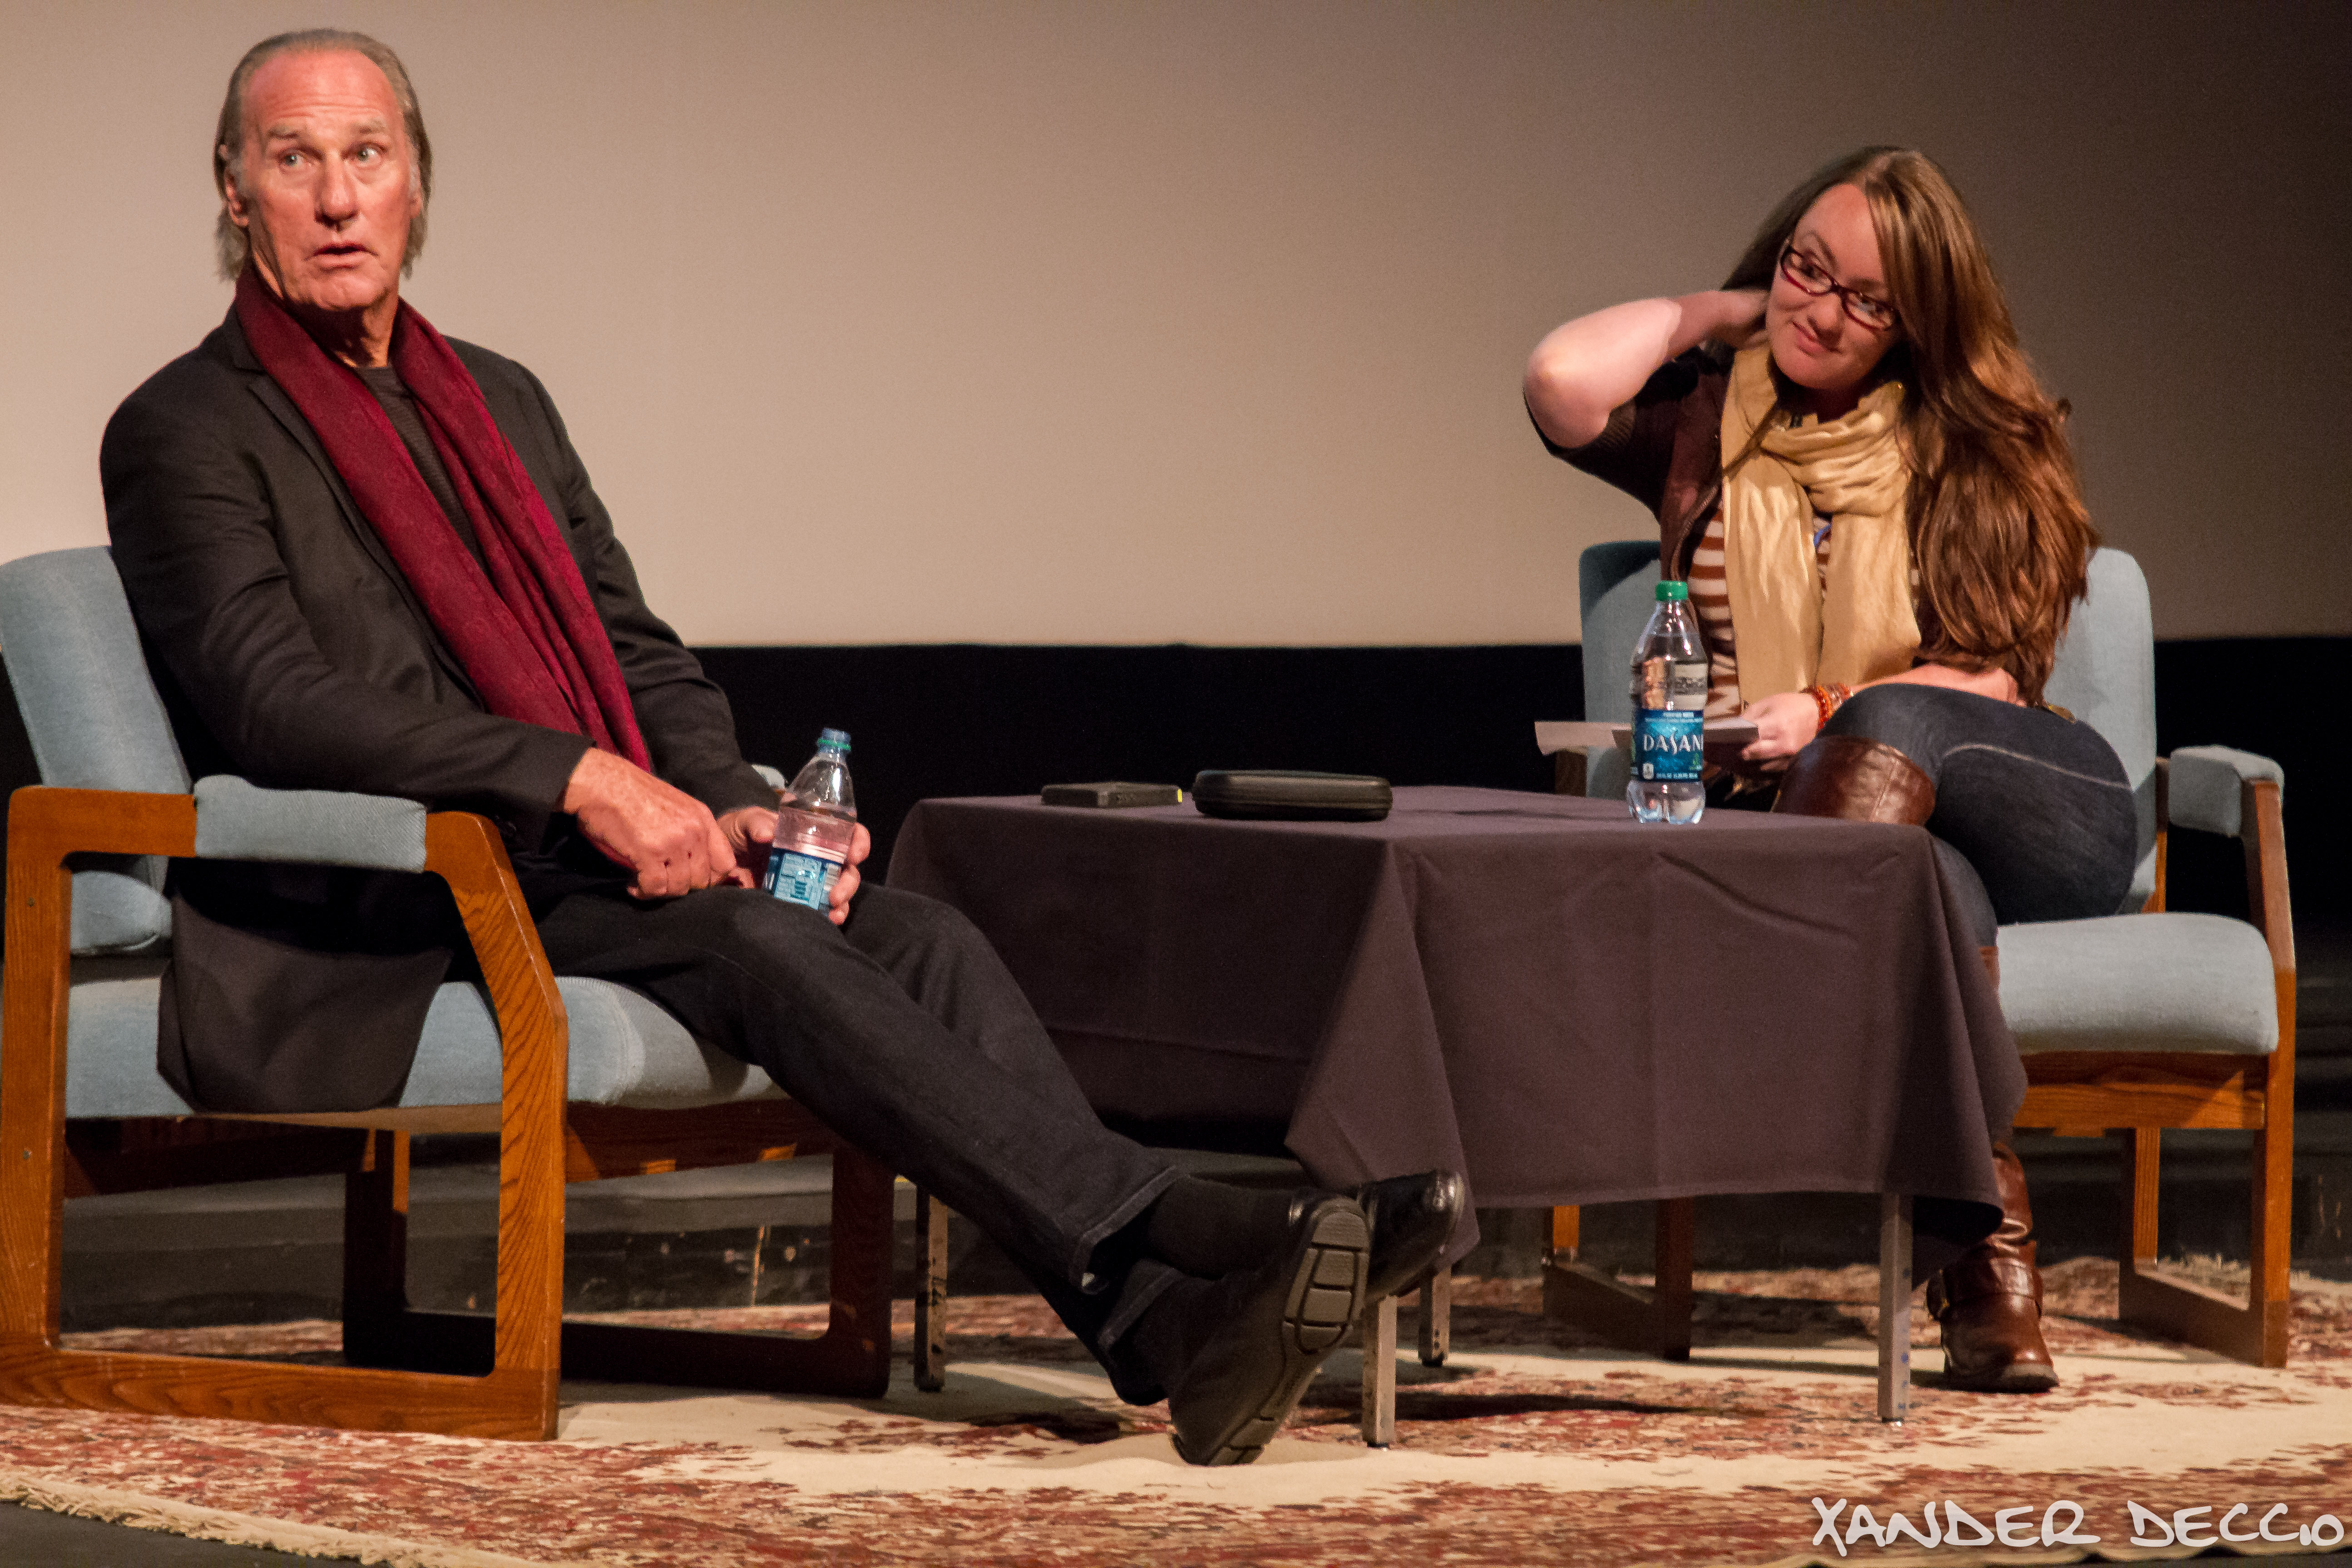 Craig T. Nelson Q&A @ Ellensburg Film Festival 2014 (Photo By: Xander Deccio)